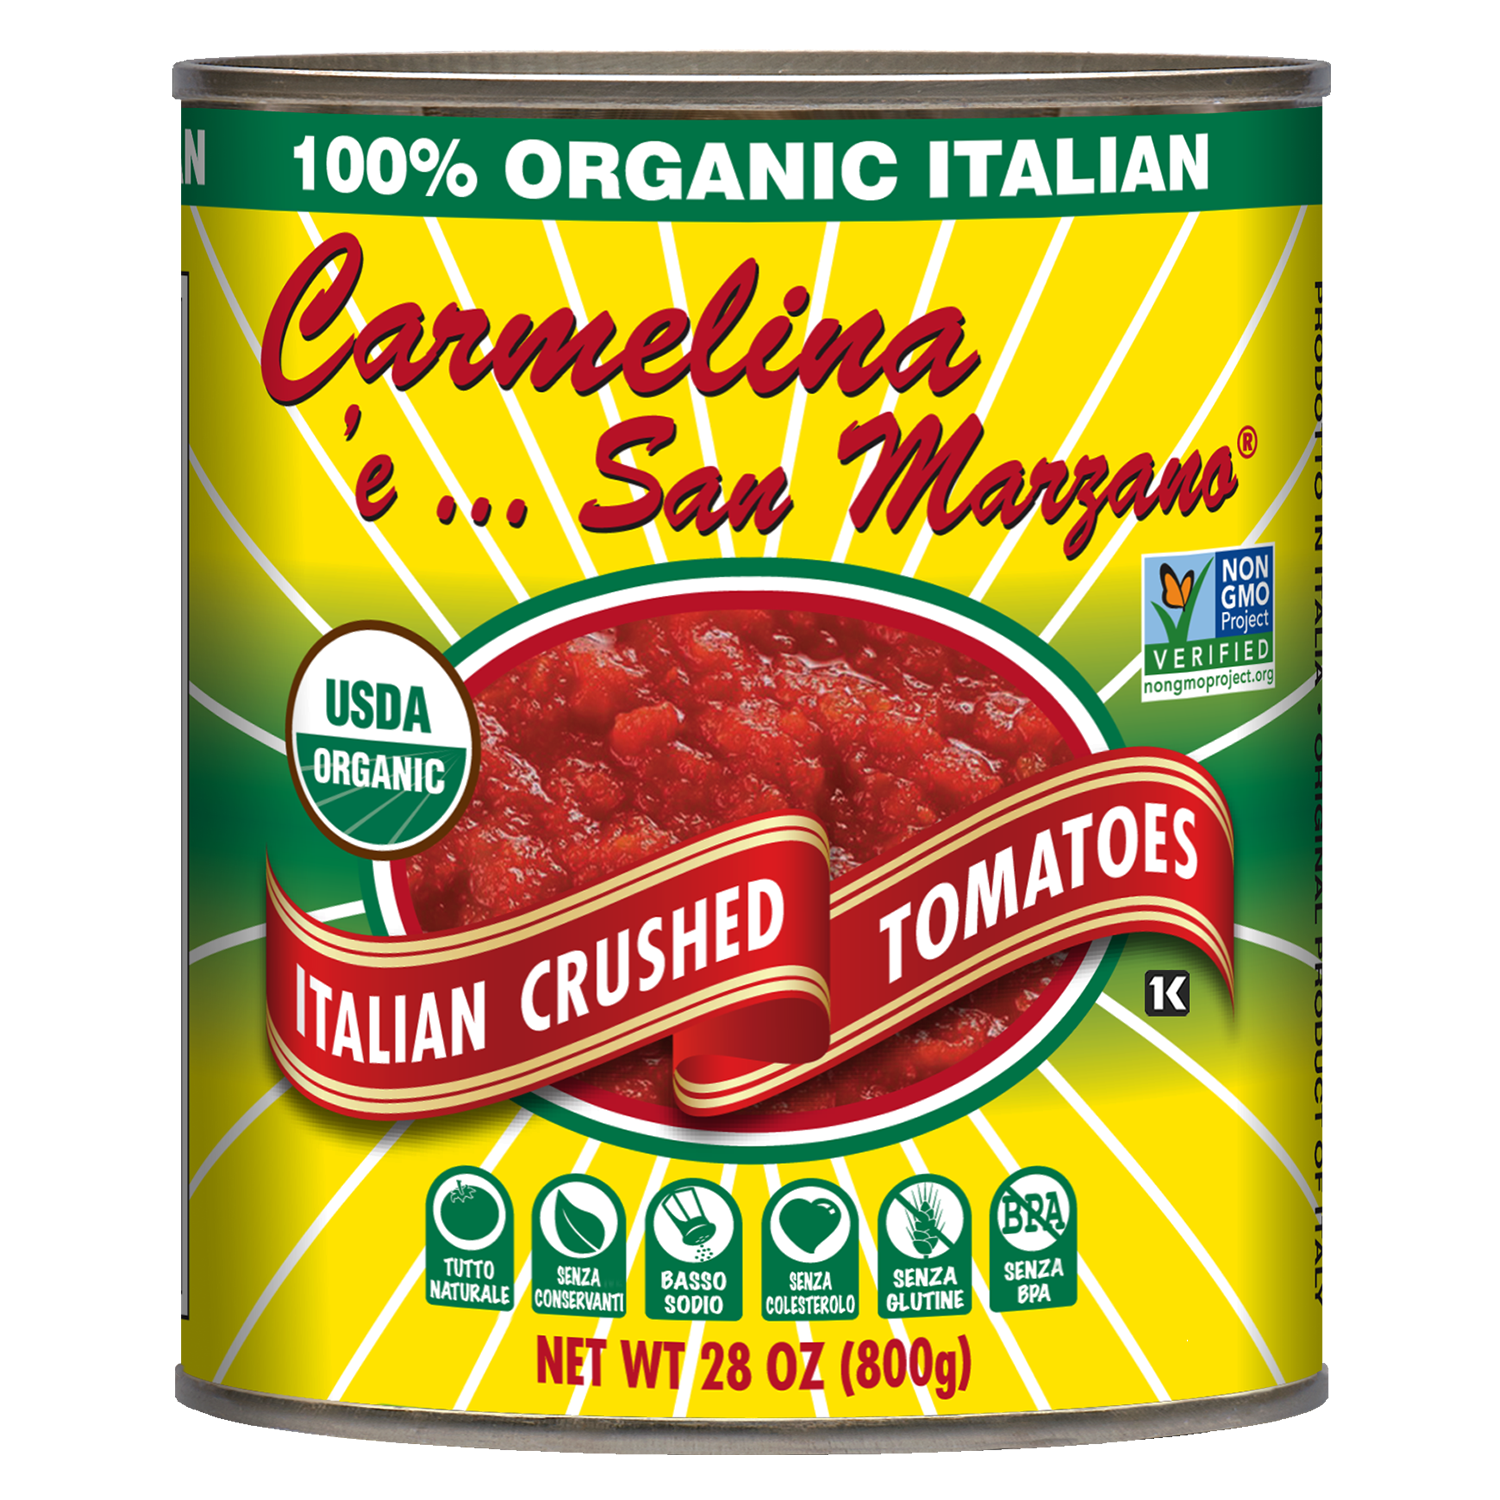 Organic Italian Crushed Tomatoes in Heavy Puree